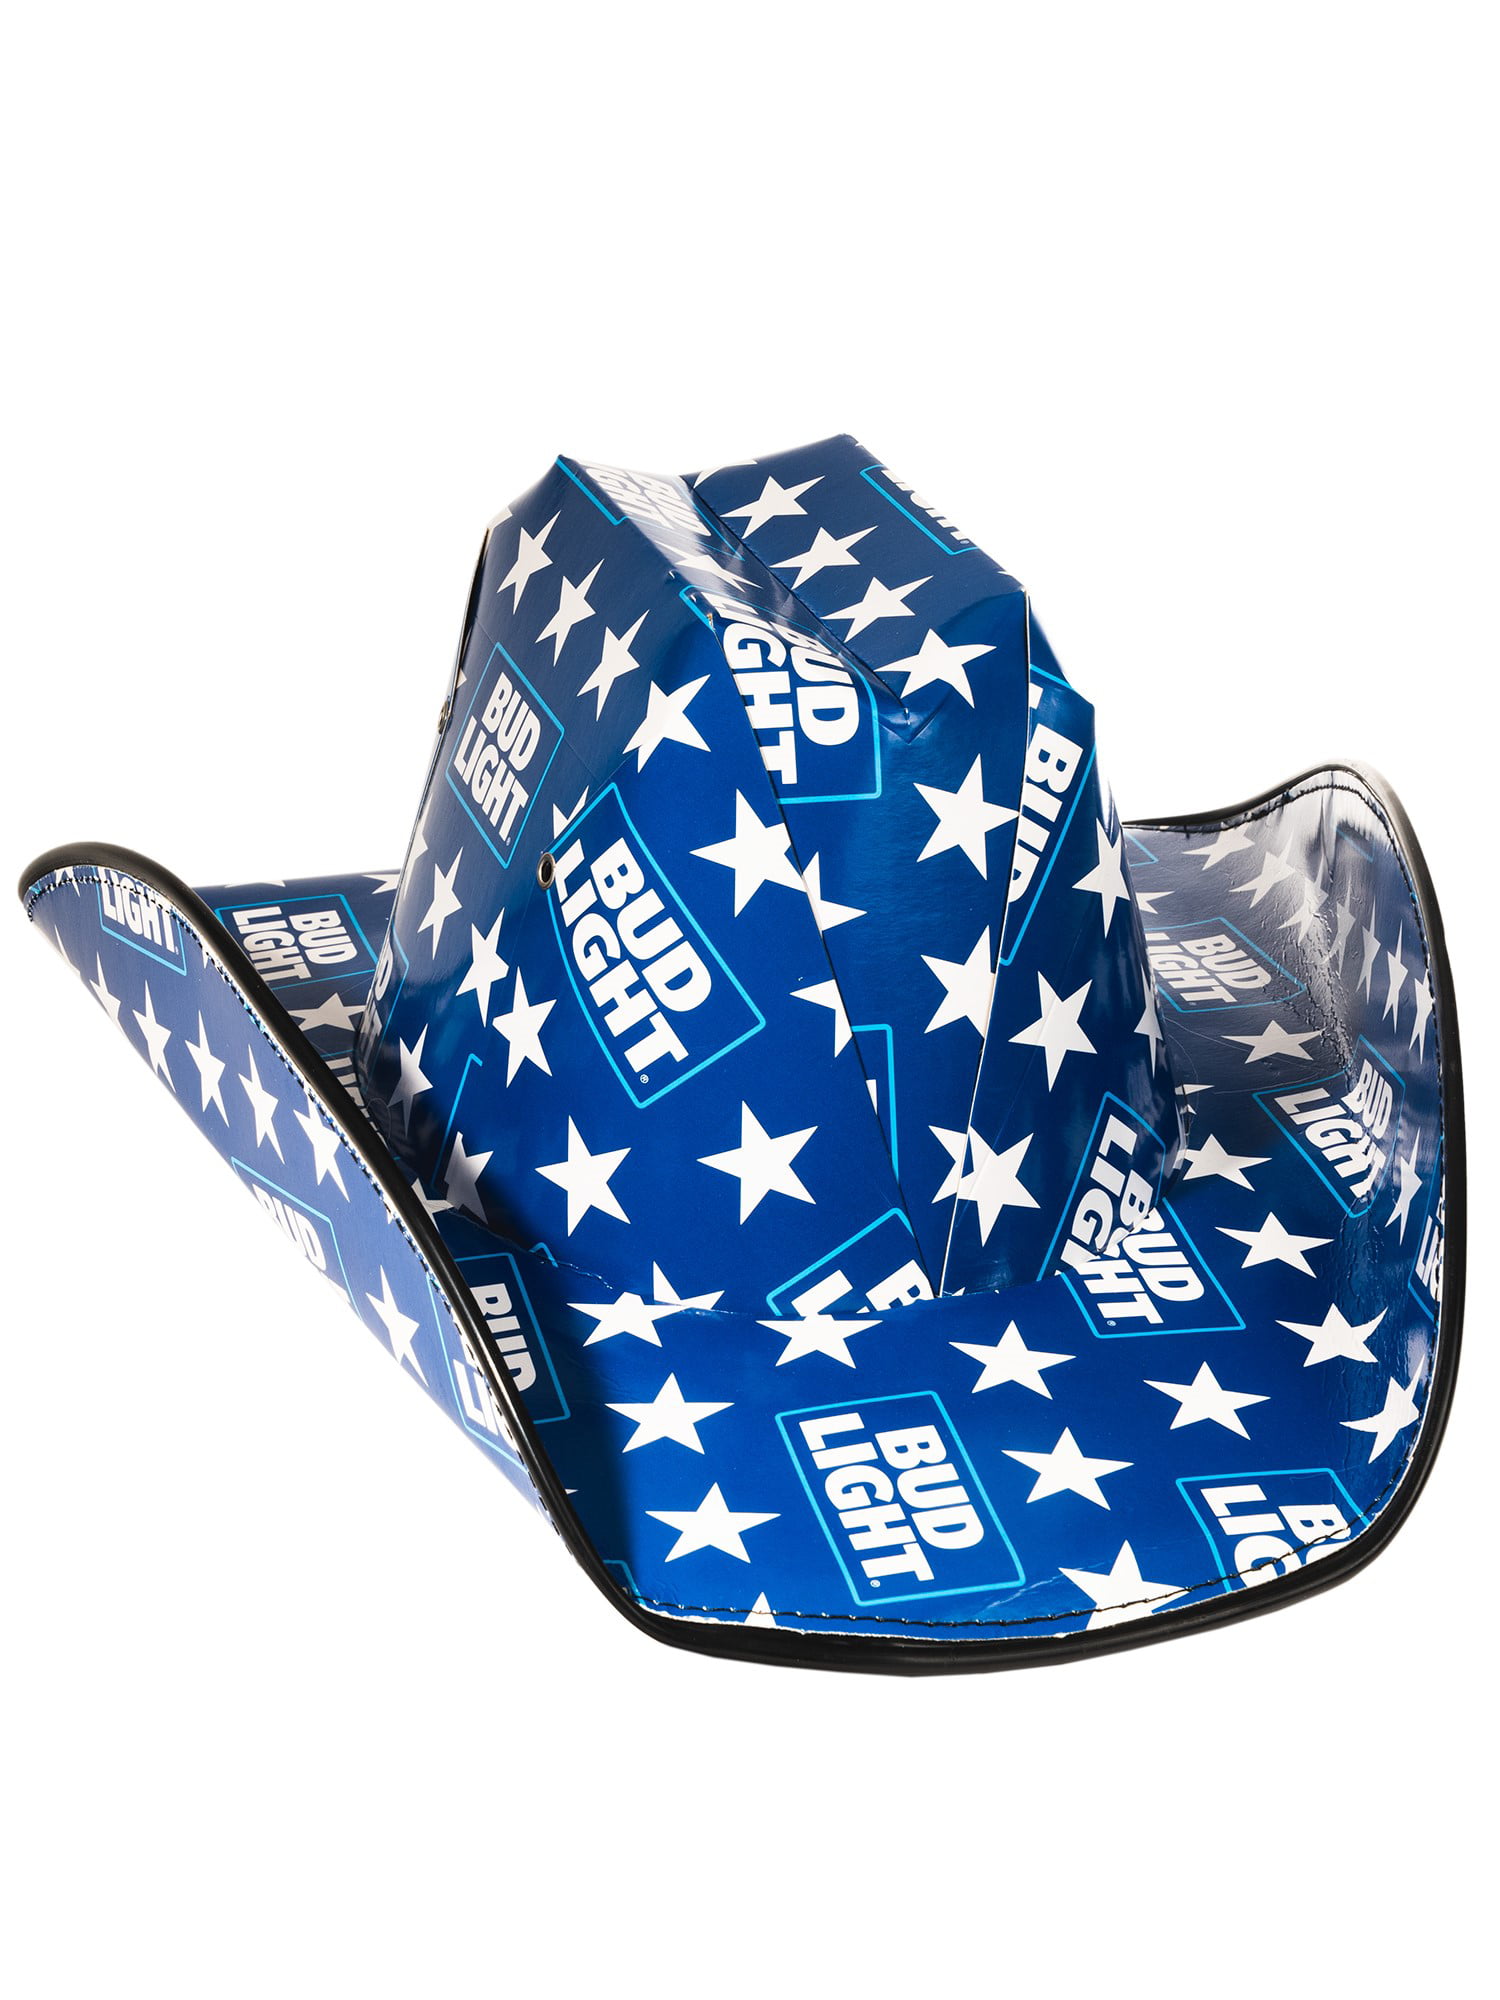 All Cotton Washed Cowboy Hat Little-Caesar Classic Adjustable Baseball Cap Unisex